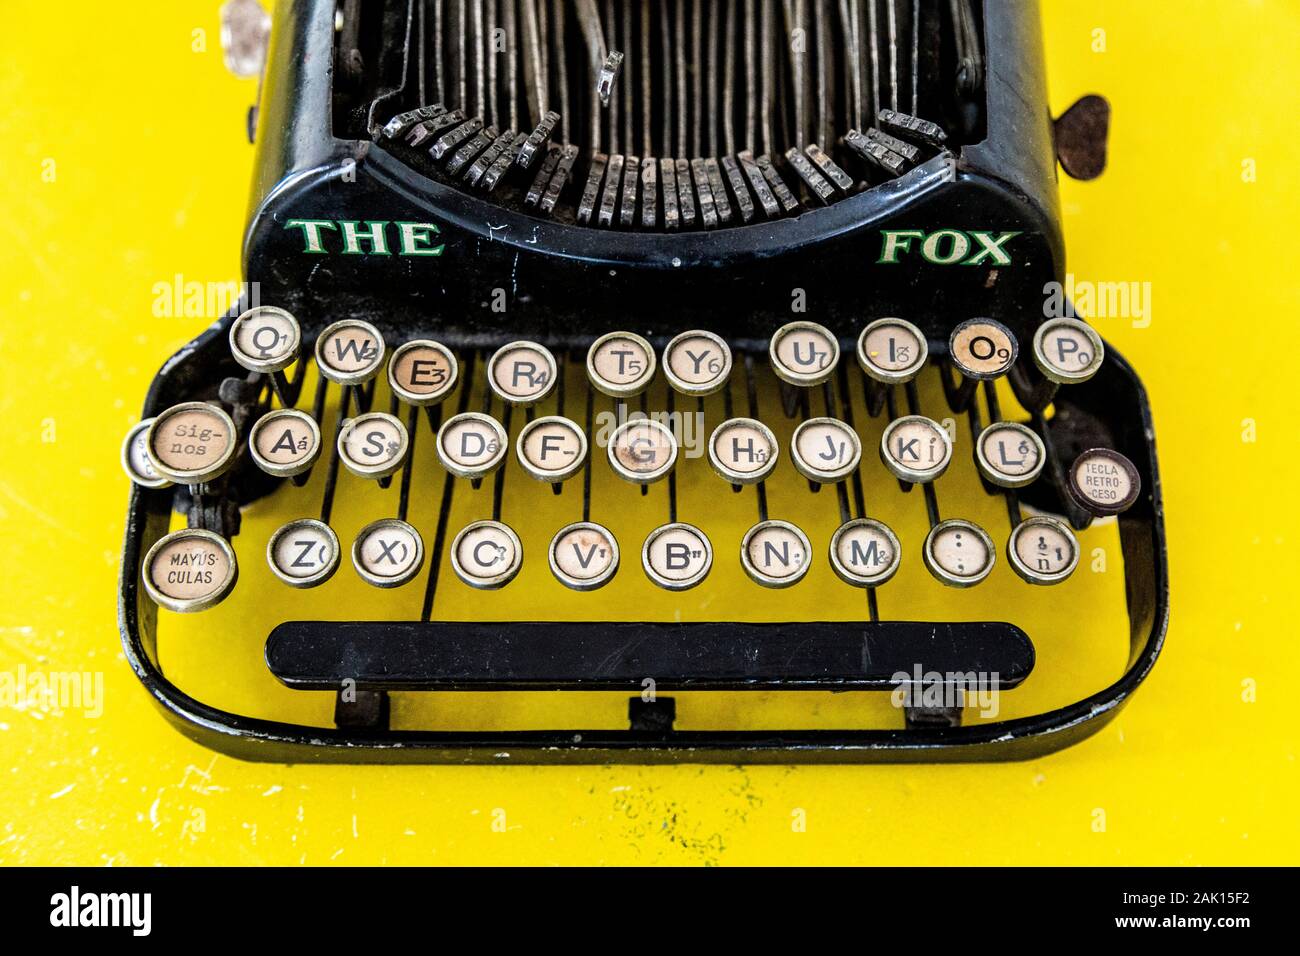 The Fox vintage typewriter on yellow background Stock Photo